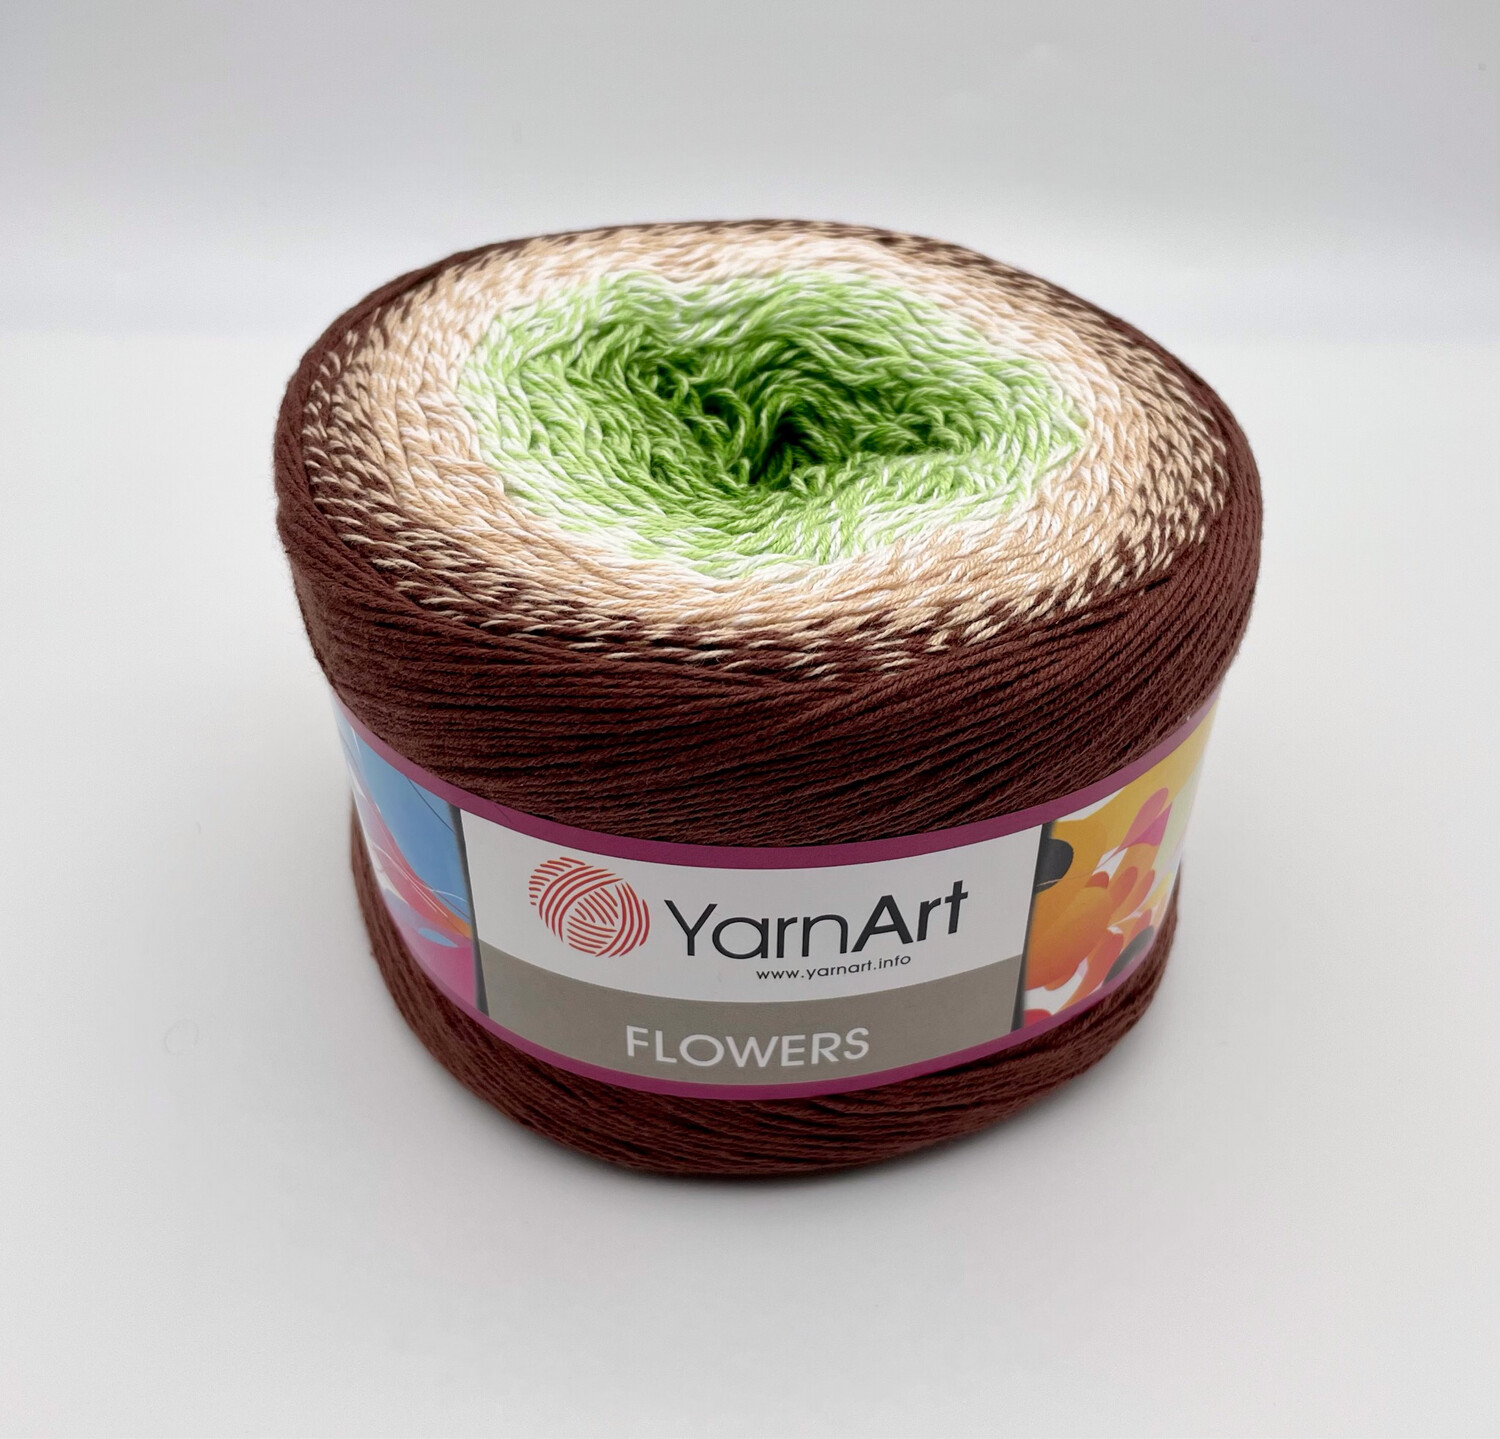 YarnArt Flowers Yarn Cake - 272